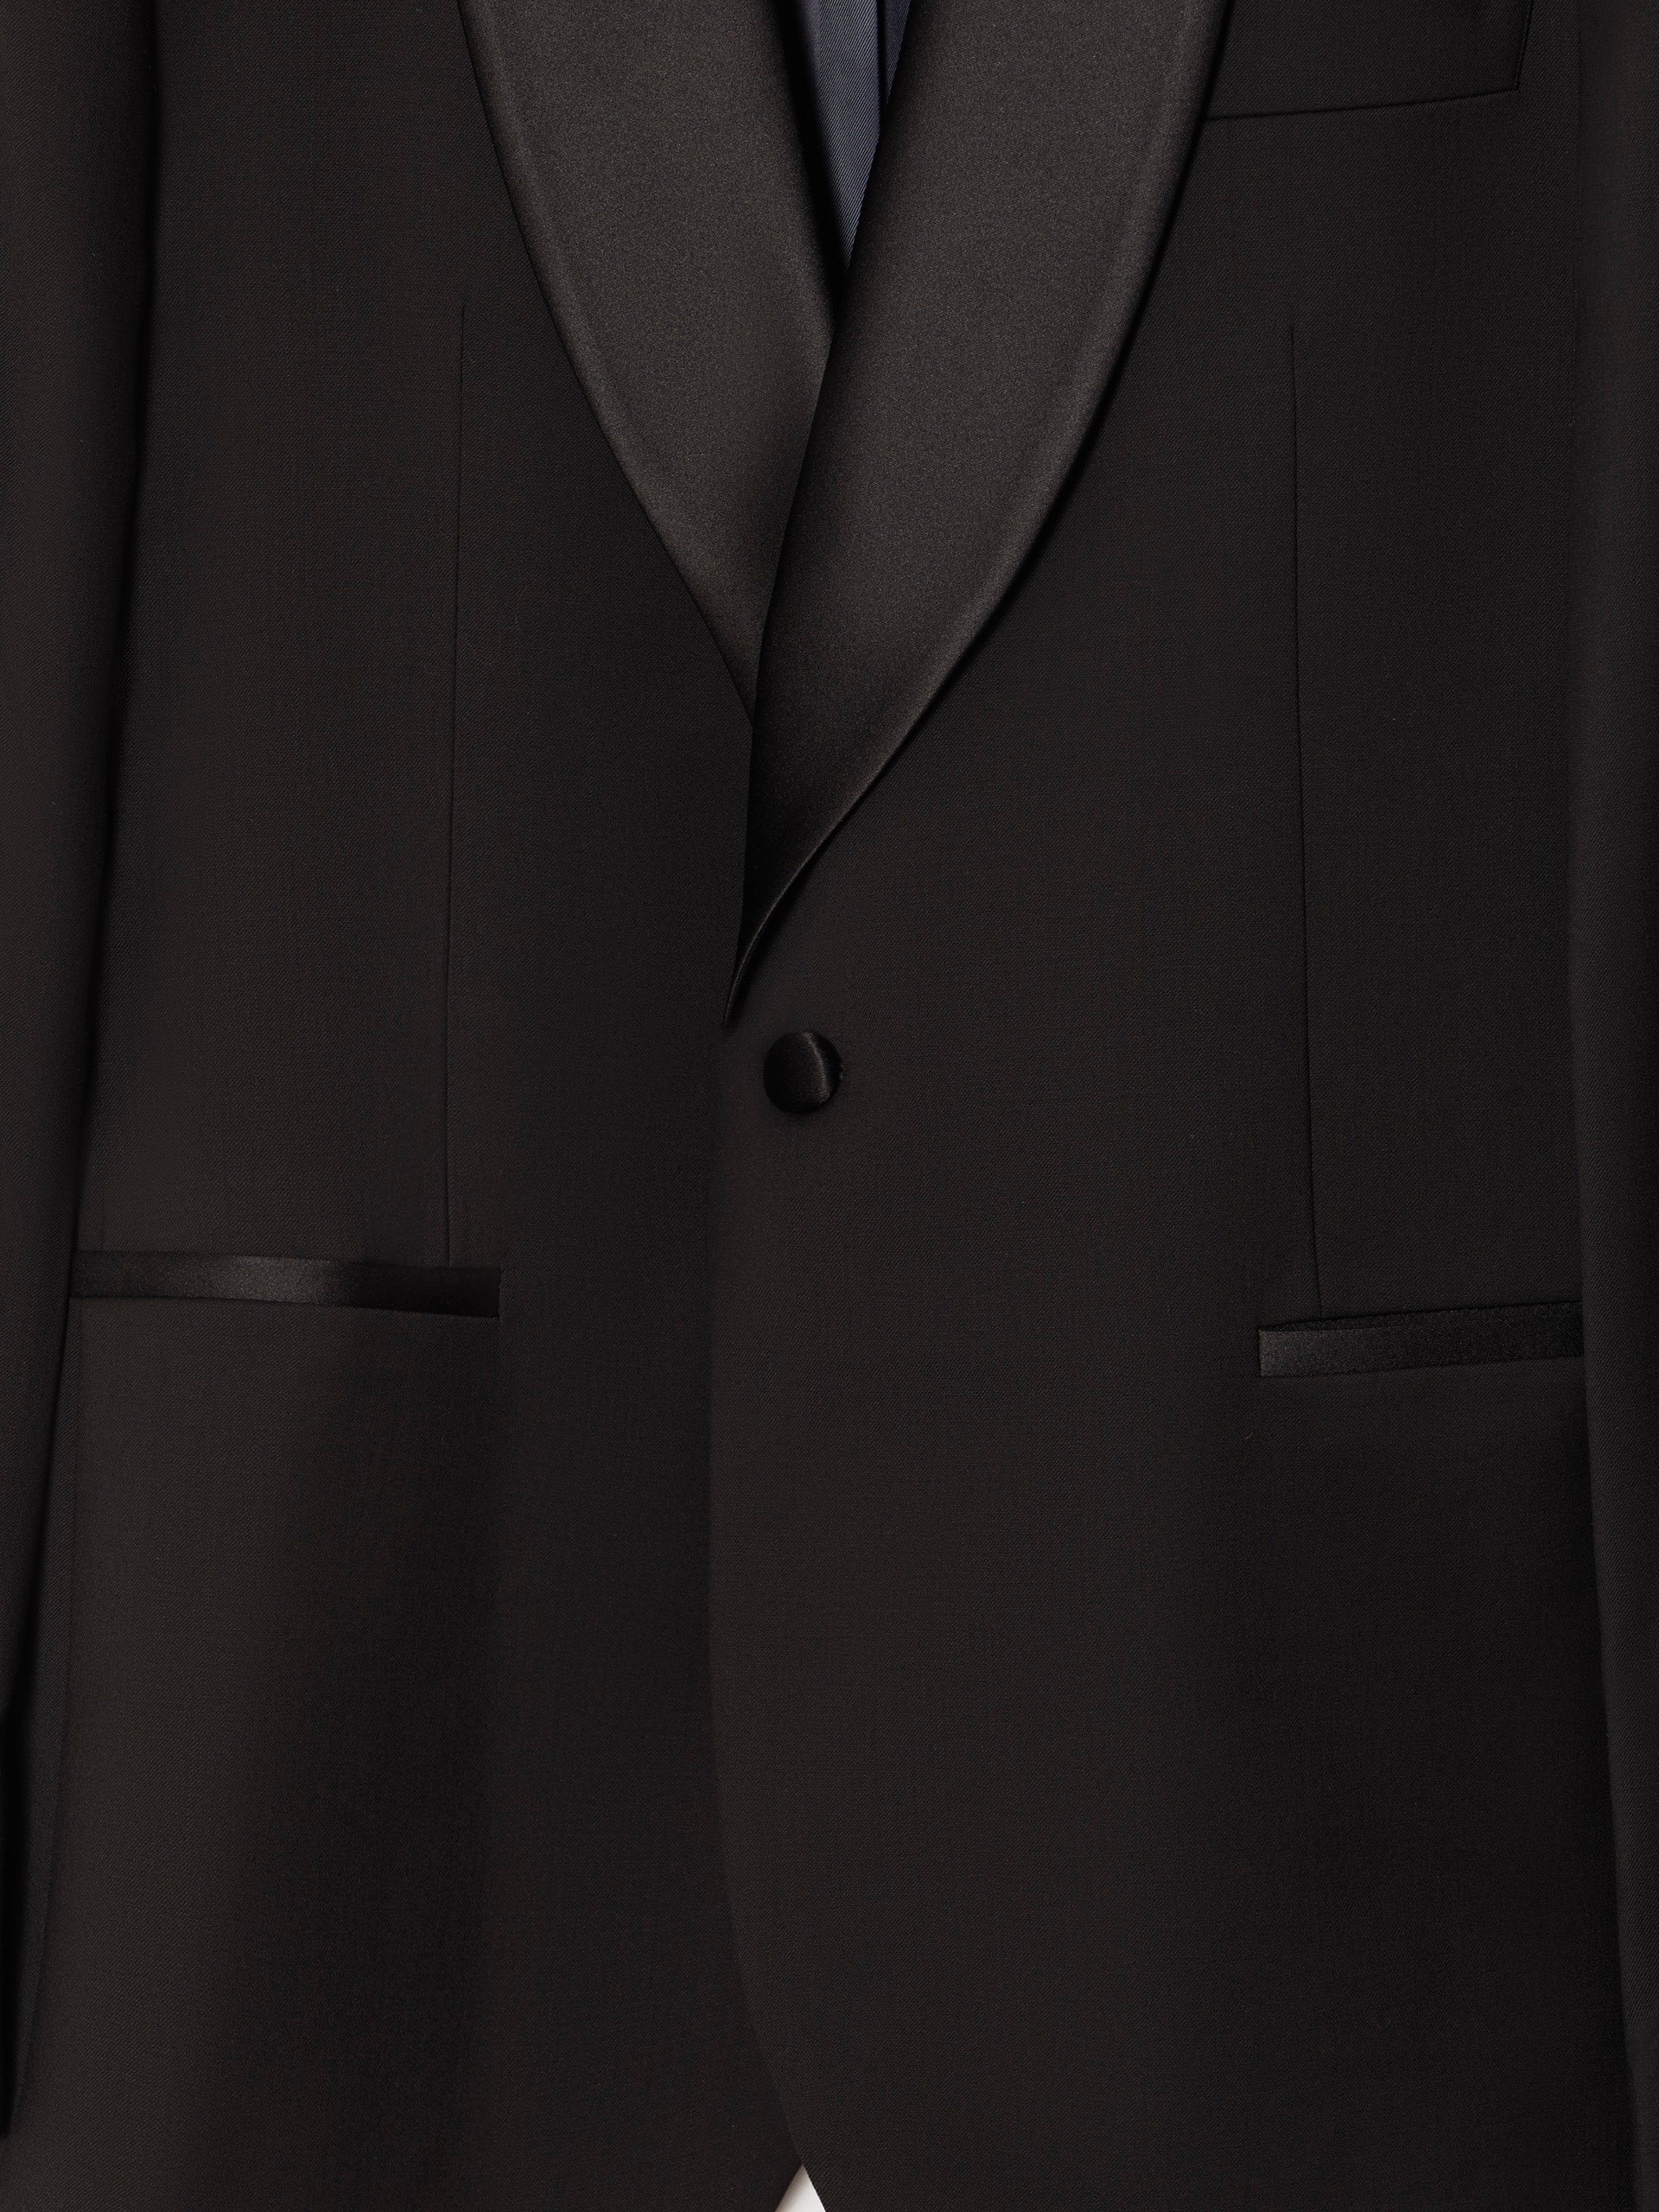 Black silbon tuxedo jacket